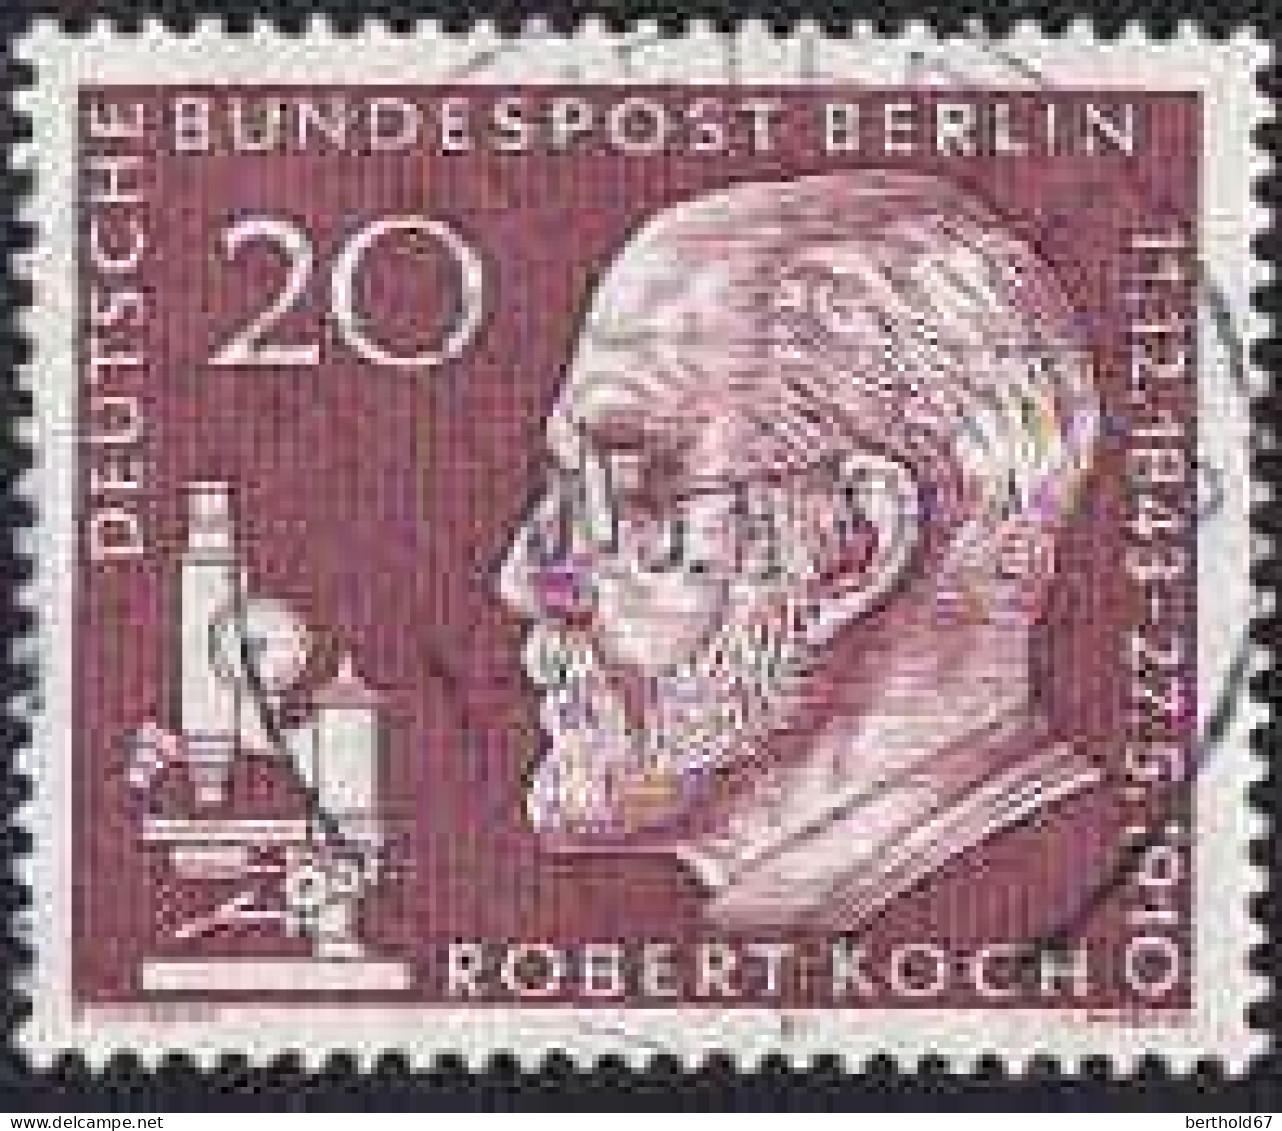 Berlin Poste Obl Yv:170 Mi:191 Robert Koch Bacteriologue Prix Nobel (TB Cachet Rond) - Used Stamps